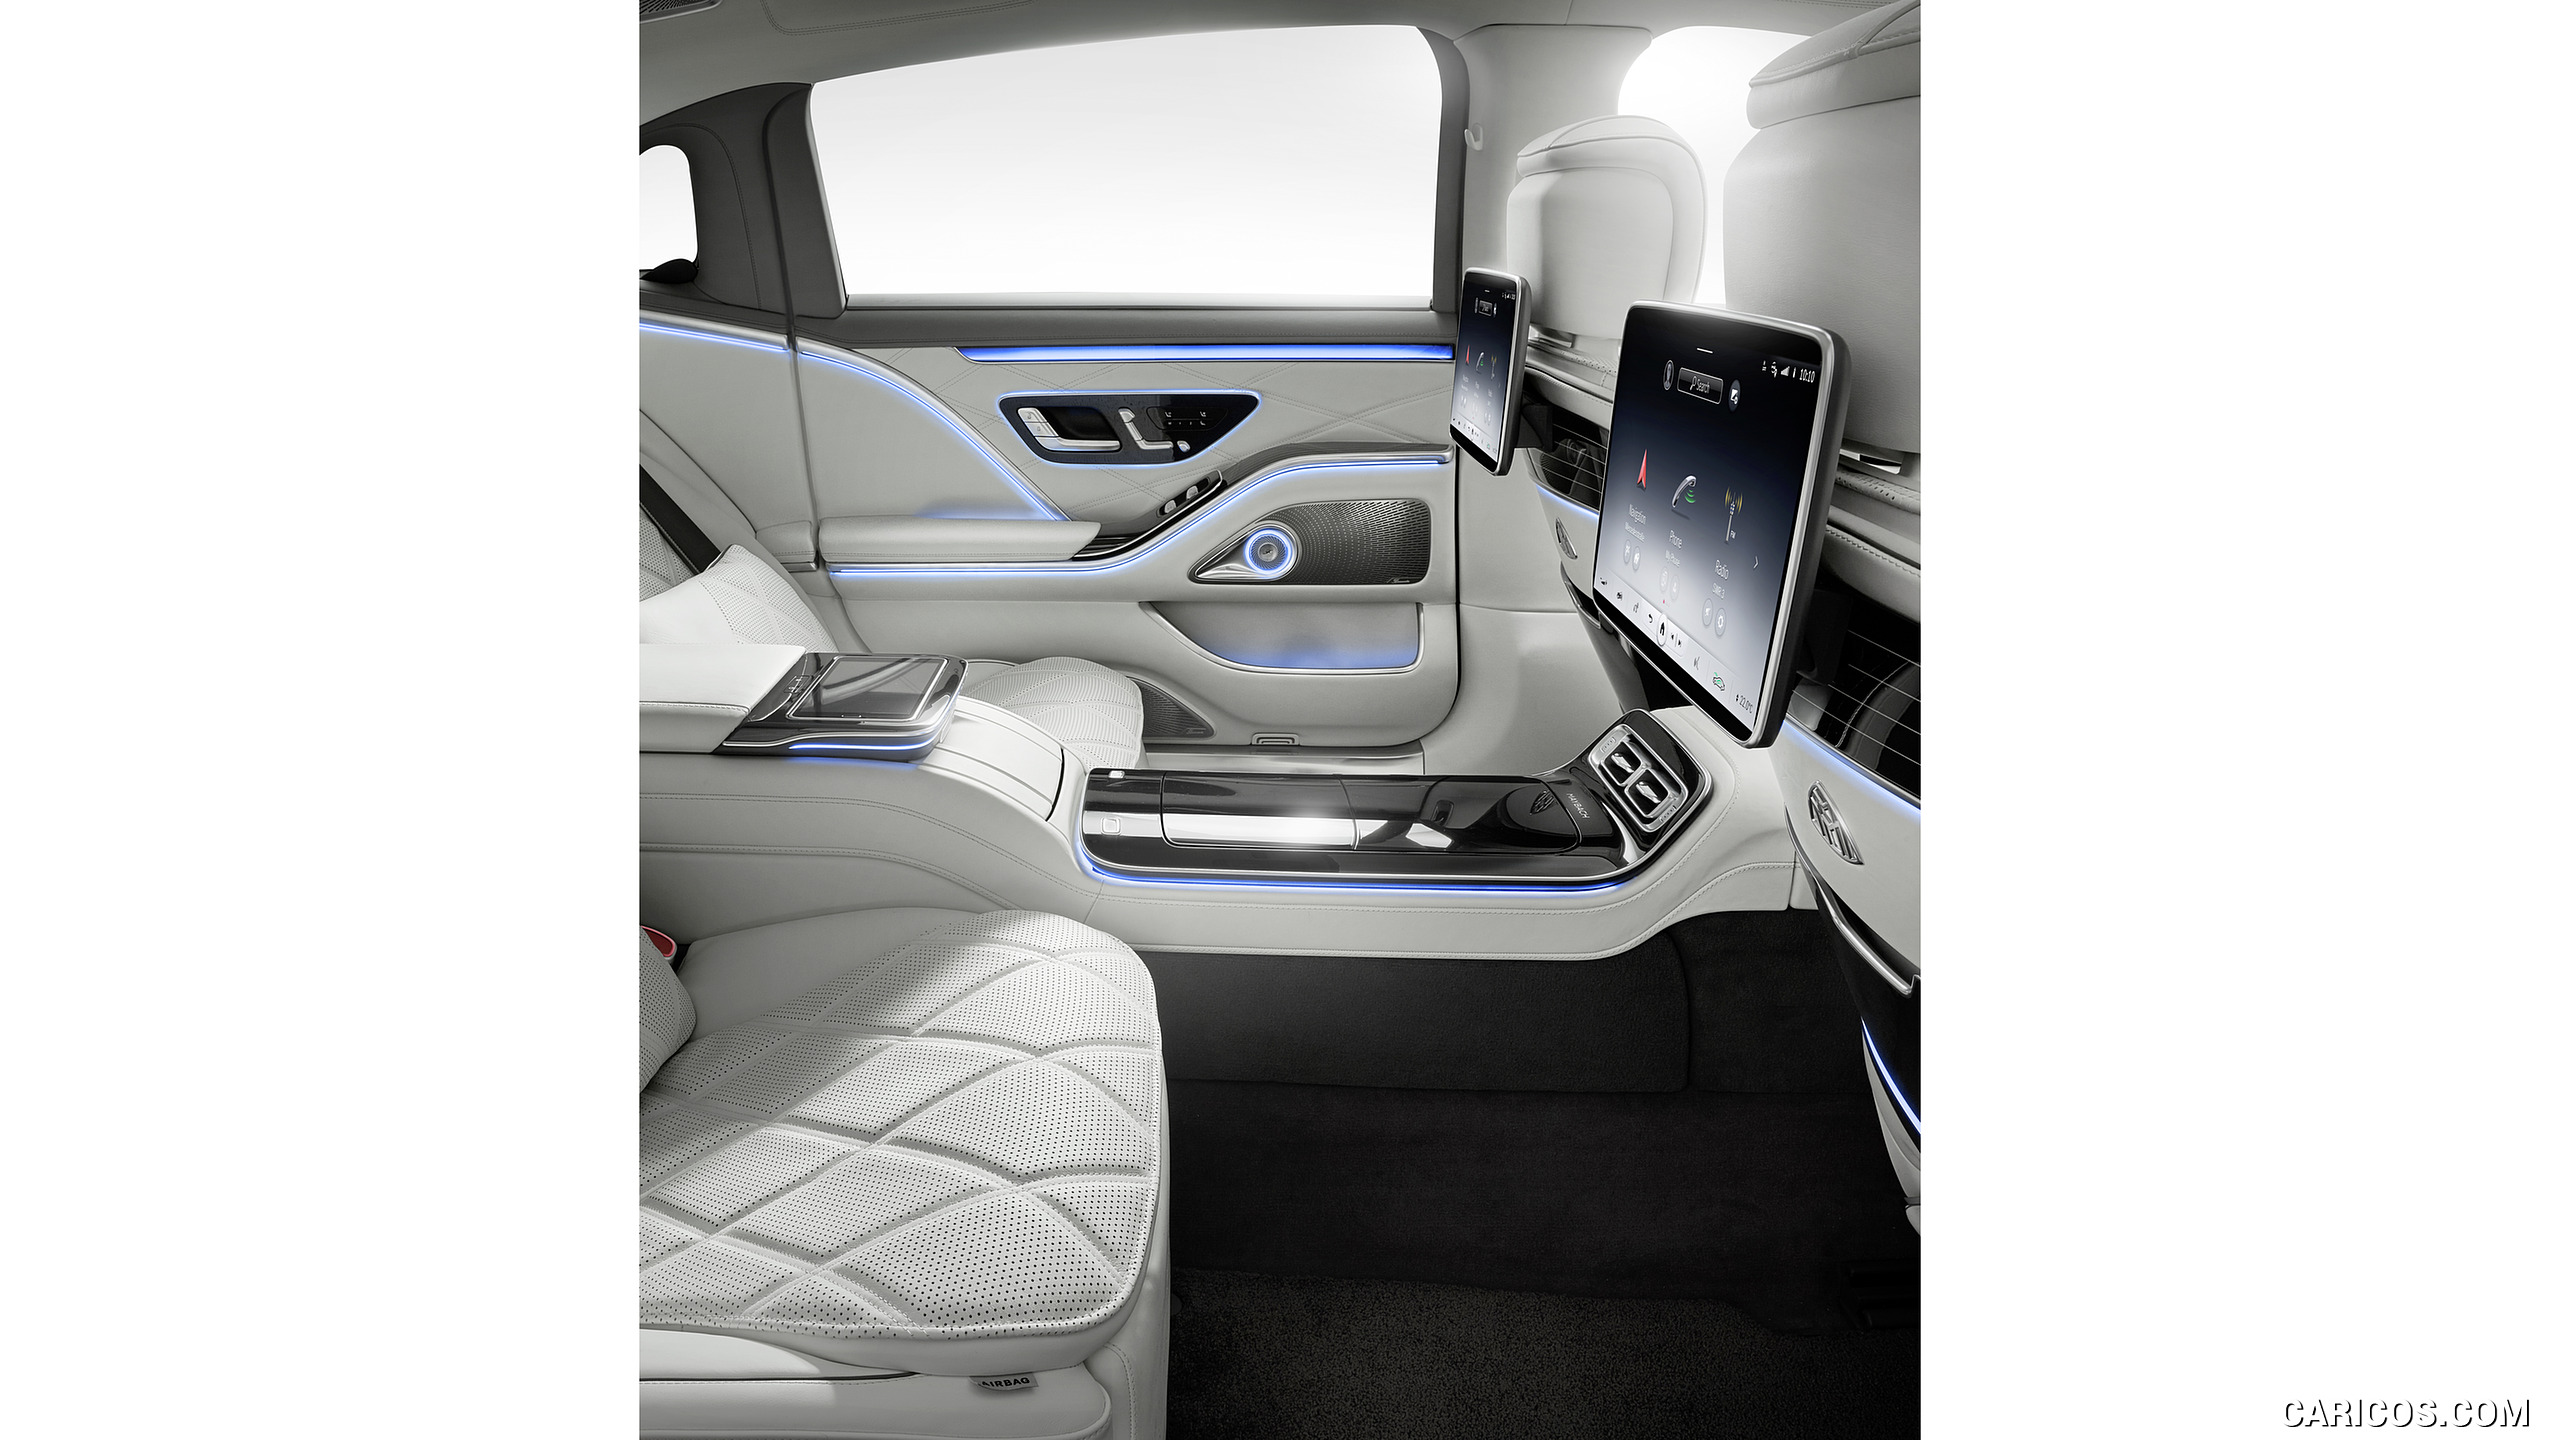 2021 Mercedes-Maybach S-Class (Color: Designo Crystal White / Silver Grey Pearl) - Interior, Rear Seats, #118 of 157